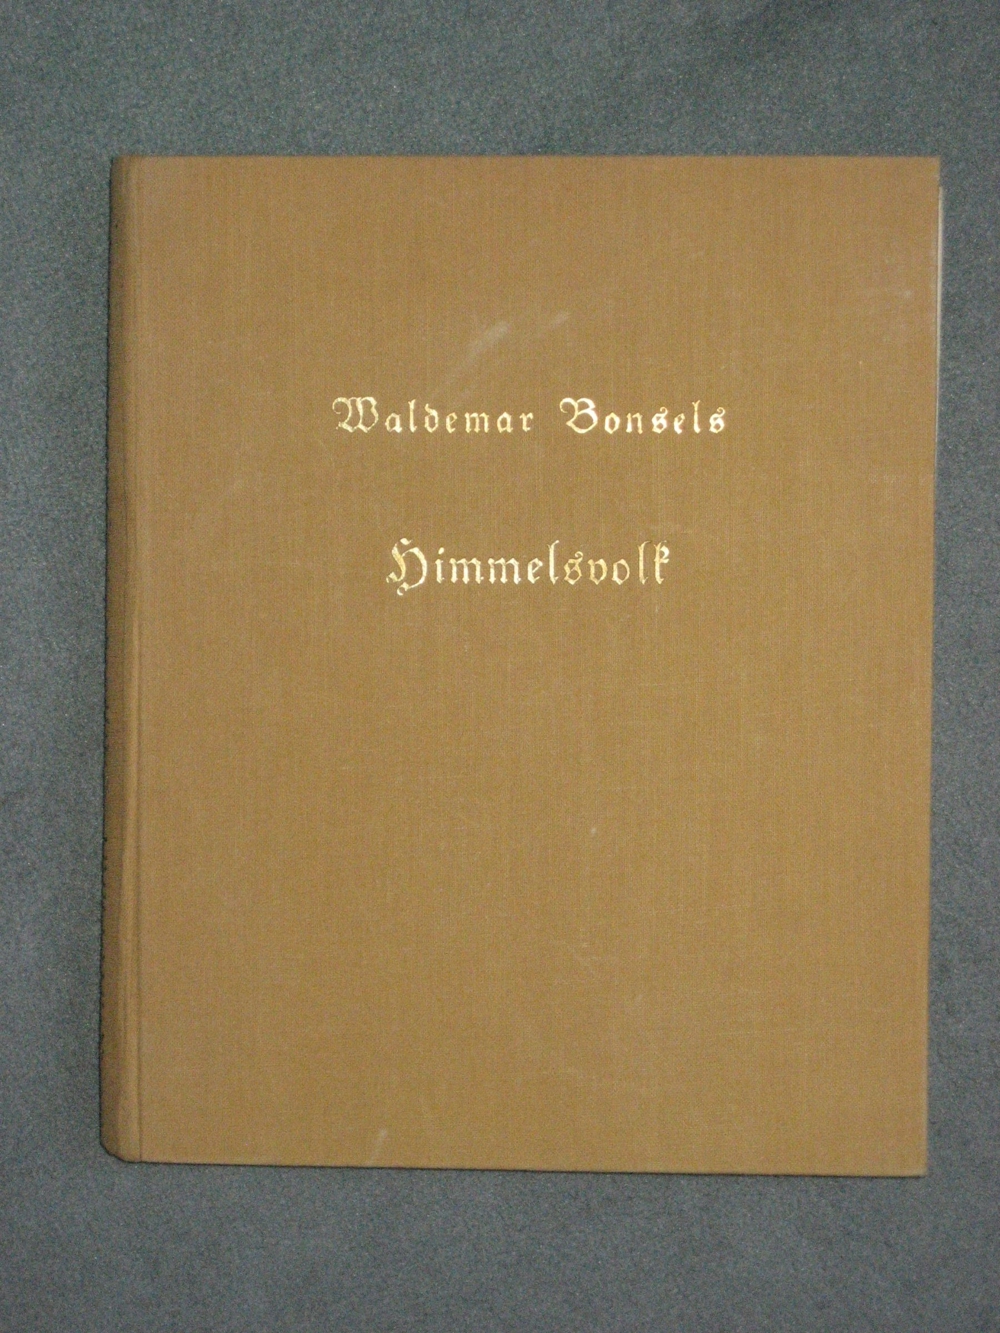 Waldemar Bonsels "Himmelsvolk" Ausgabe ca. 1925, illustriert